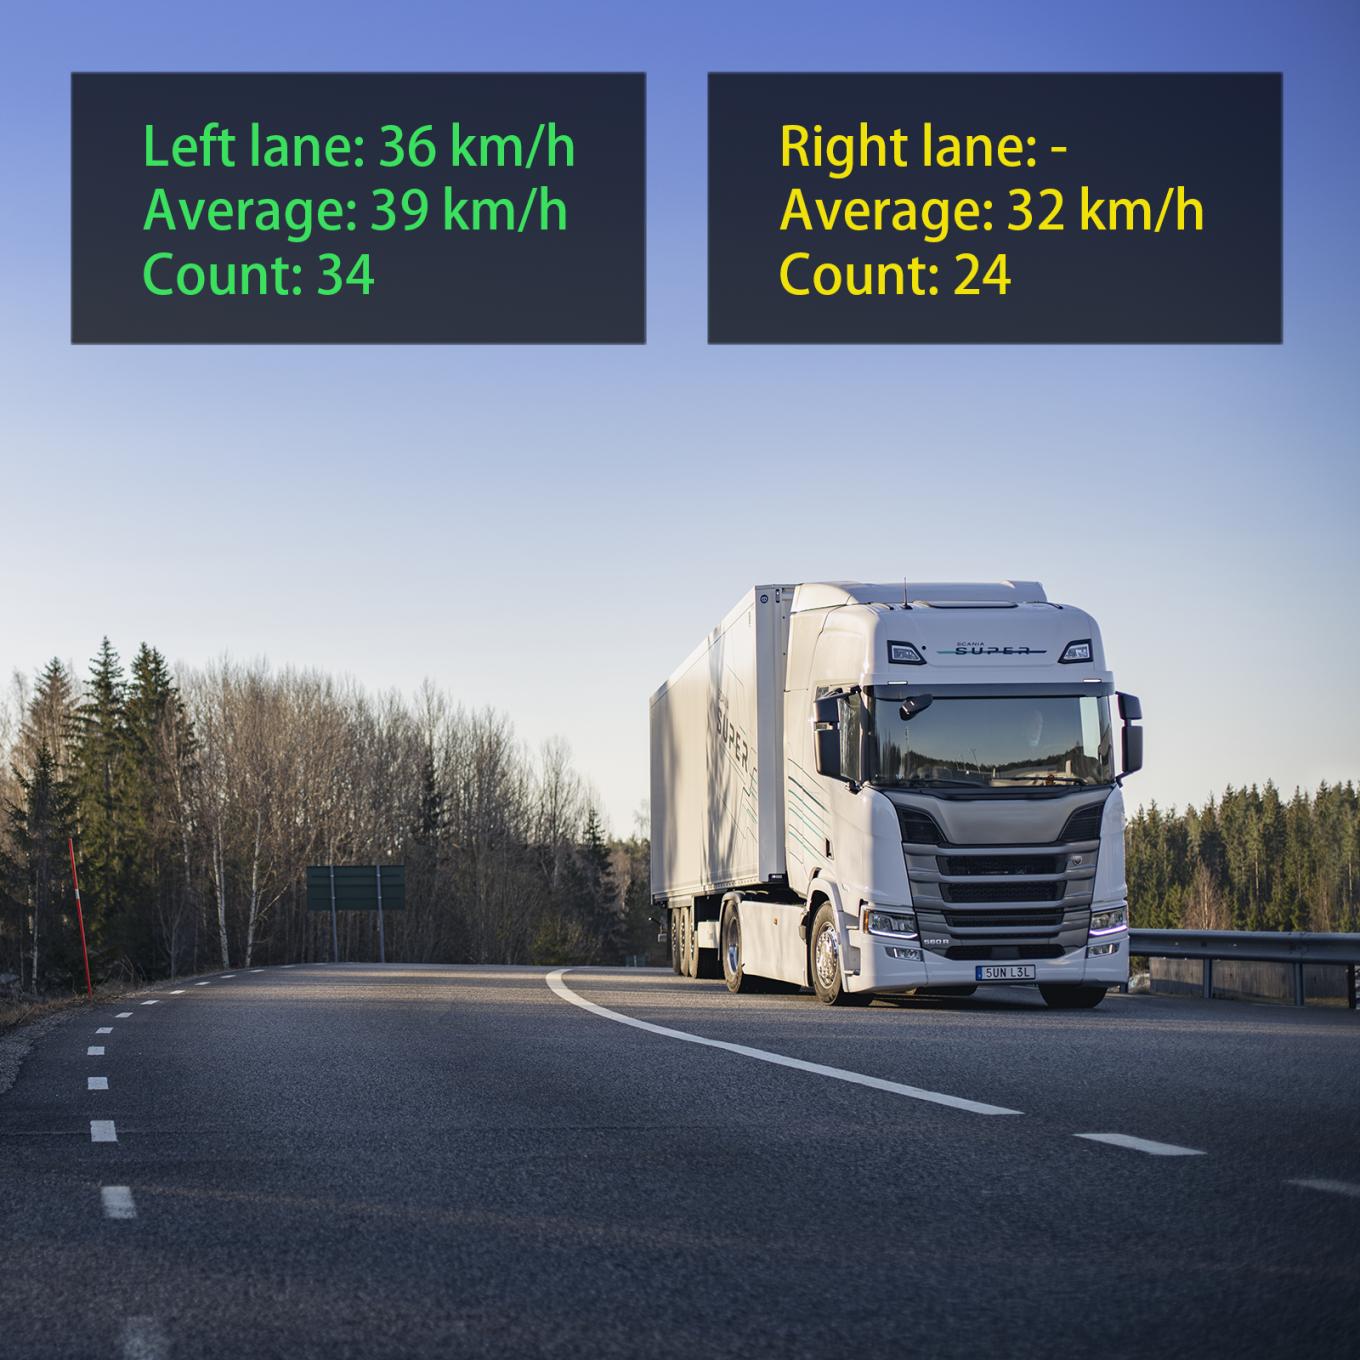 Визуализация монитора Axis speed monitor, с белым грузовиком, едущим по дороге